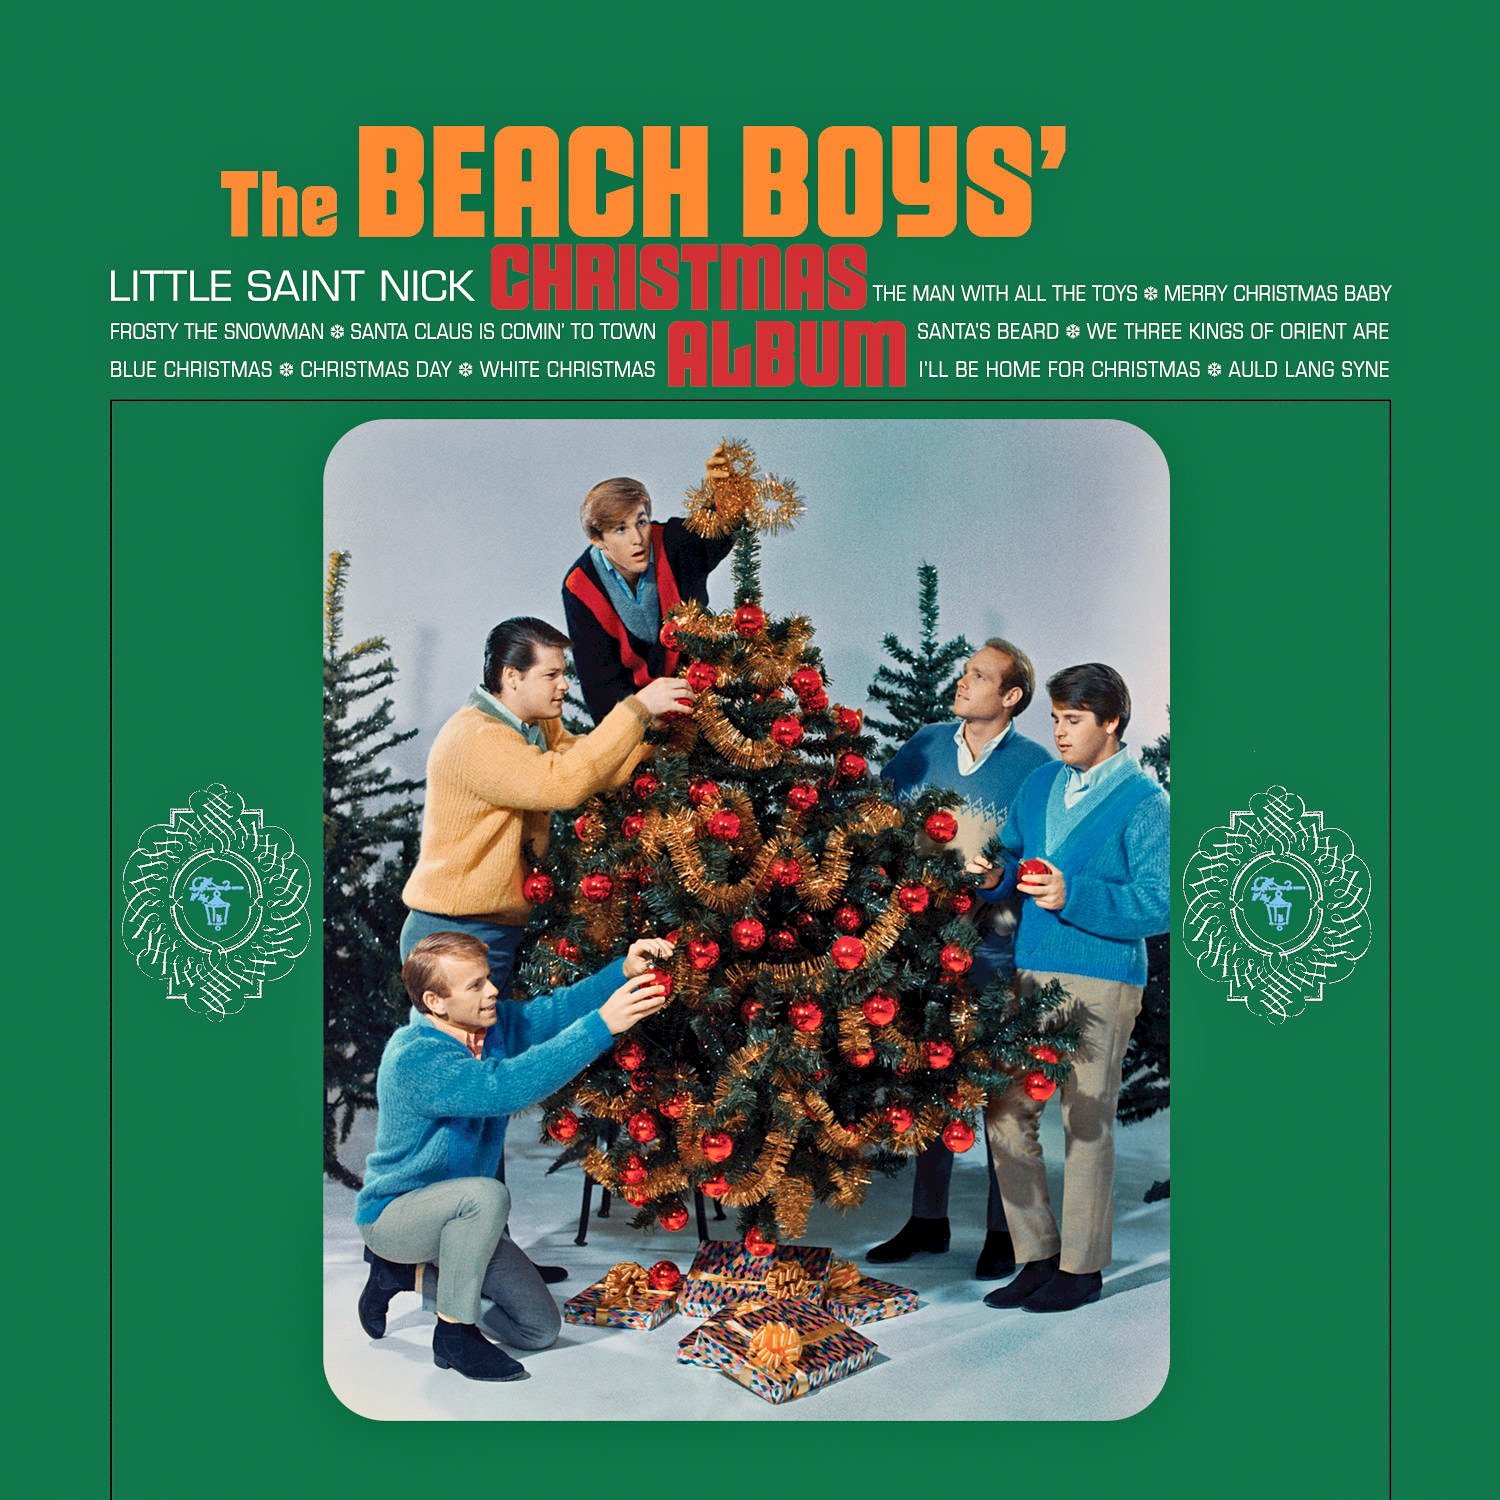 The Beach Boys-The Beach Boys Christmas Album-24-192-WEB-FLAC-REMASTERED DELUXE EDITION-2015-OBZEN Download